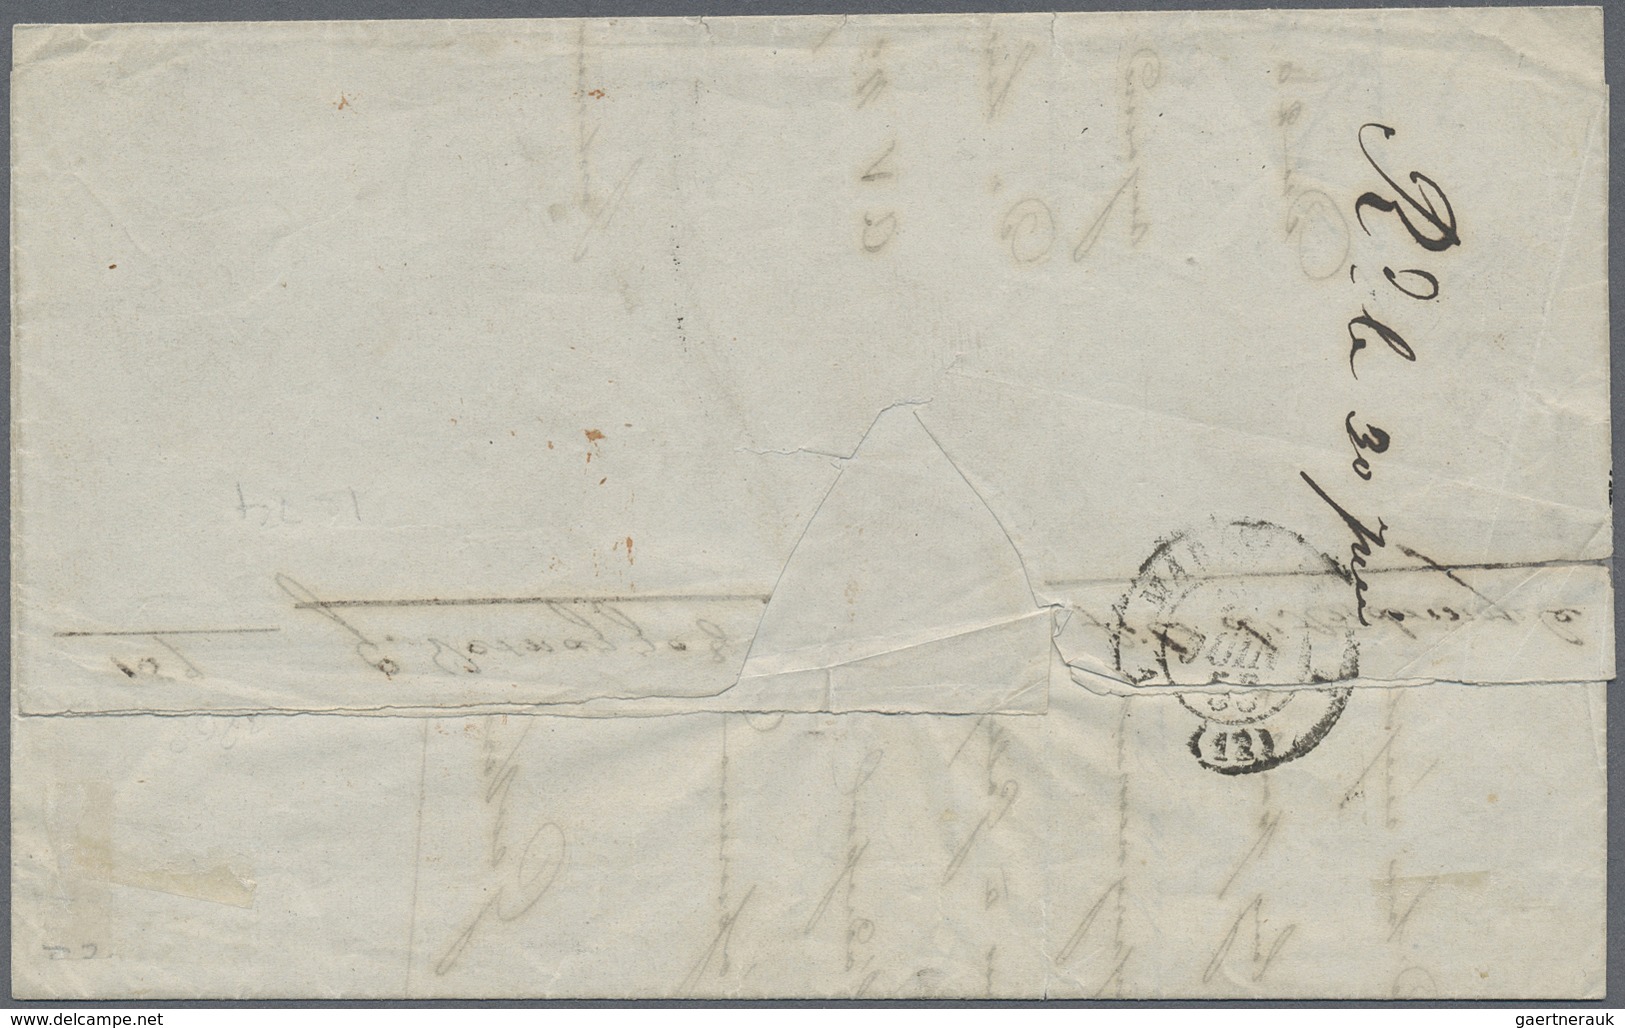 Br Türkei - Vorphilatelie: 1853: "GALLIPOLI" Clear Strike Of The Rare Postmark Of The French Post Offic - ...-1858 Voorfilatelie